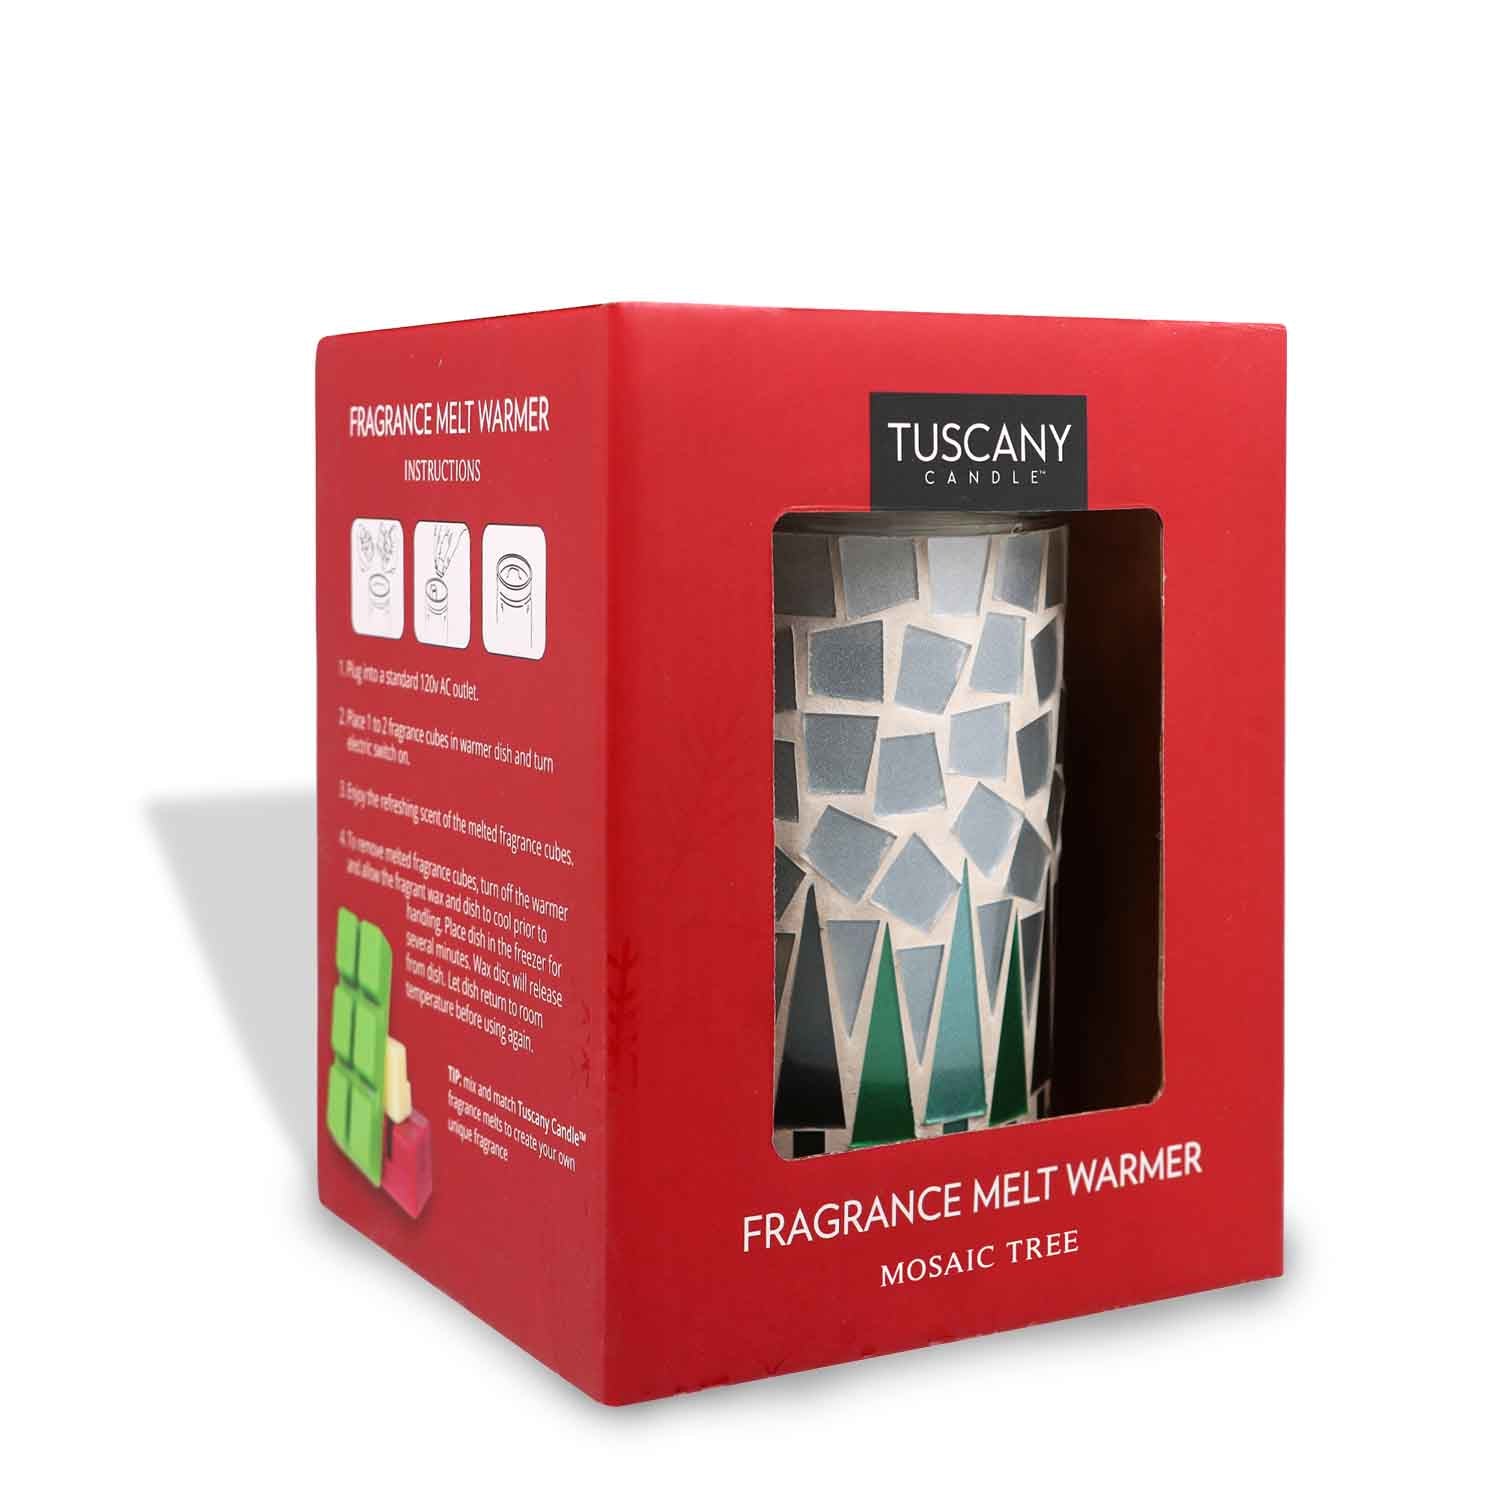 Tuscany Candle® SEASONAL offers the Mosaic Tree Wax Melt Warmer inspired by the beauty of Tuscany.